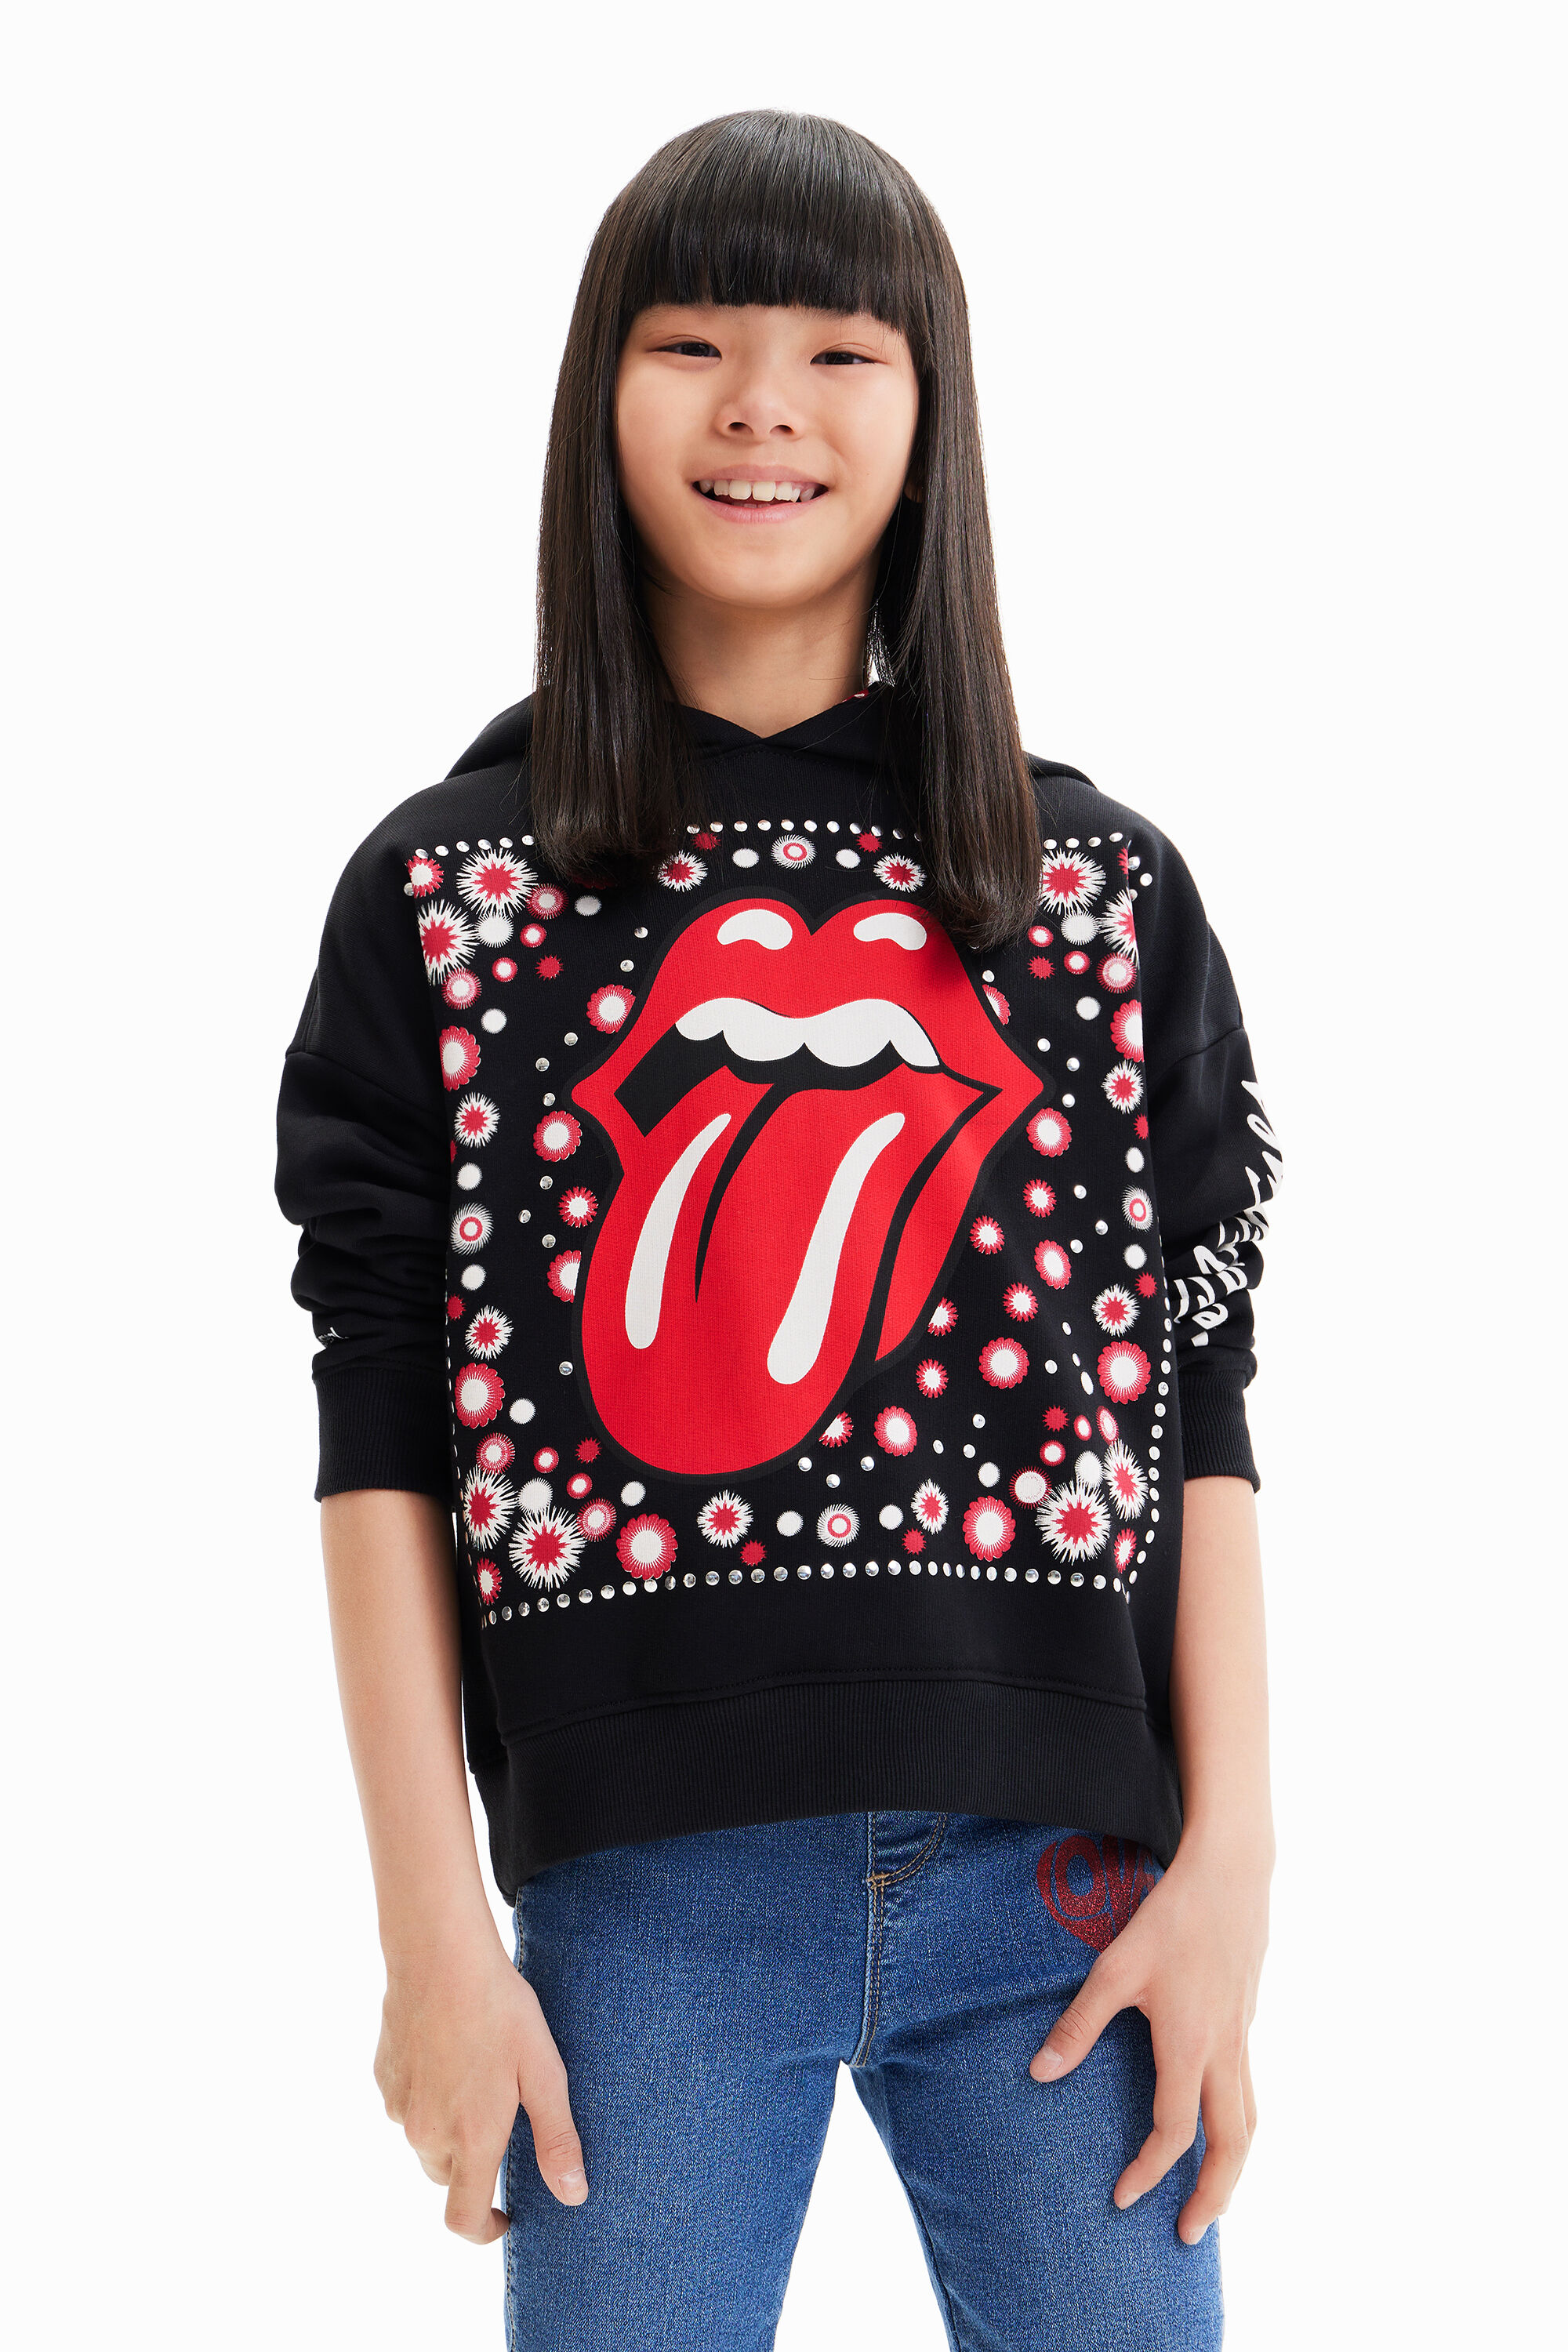 Desigual The Rolling Stones hoodie